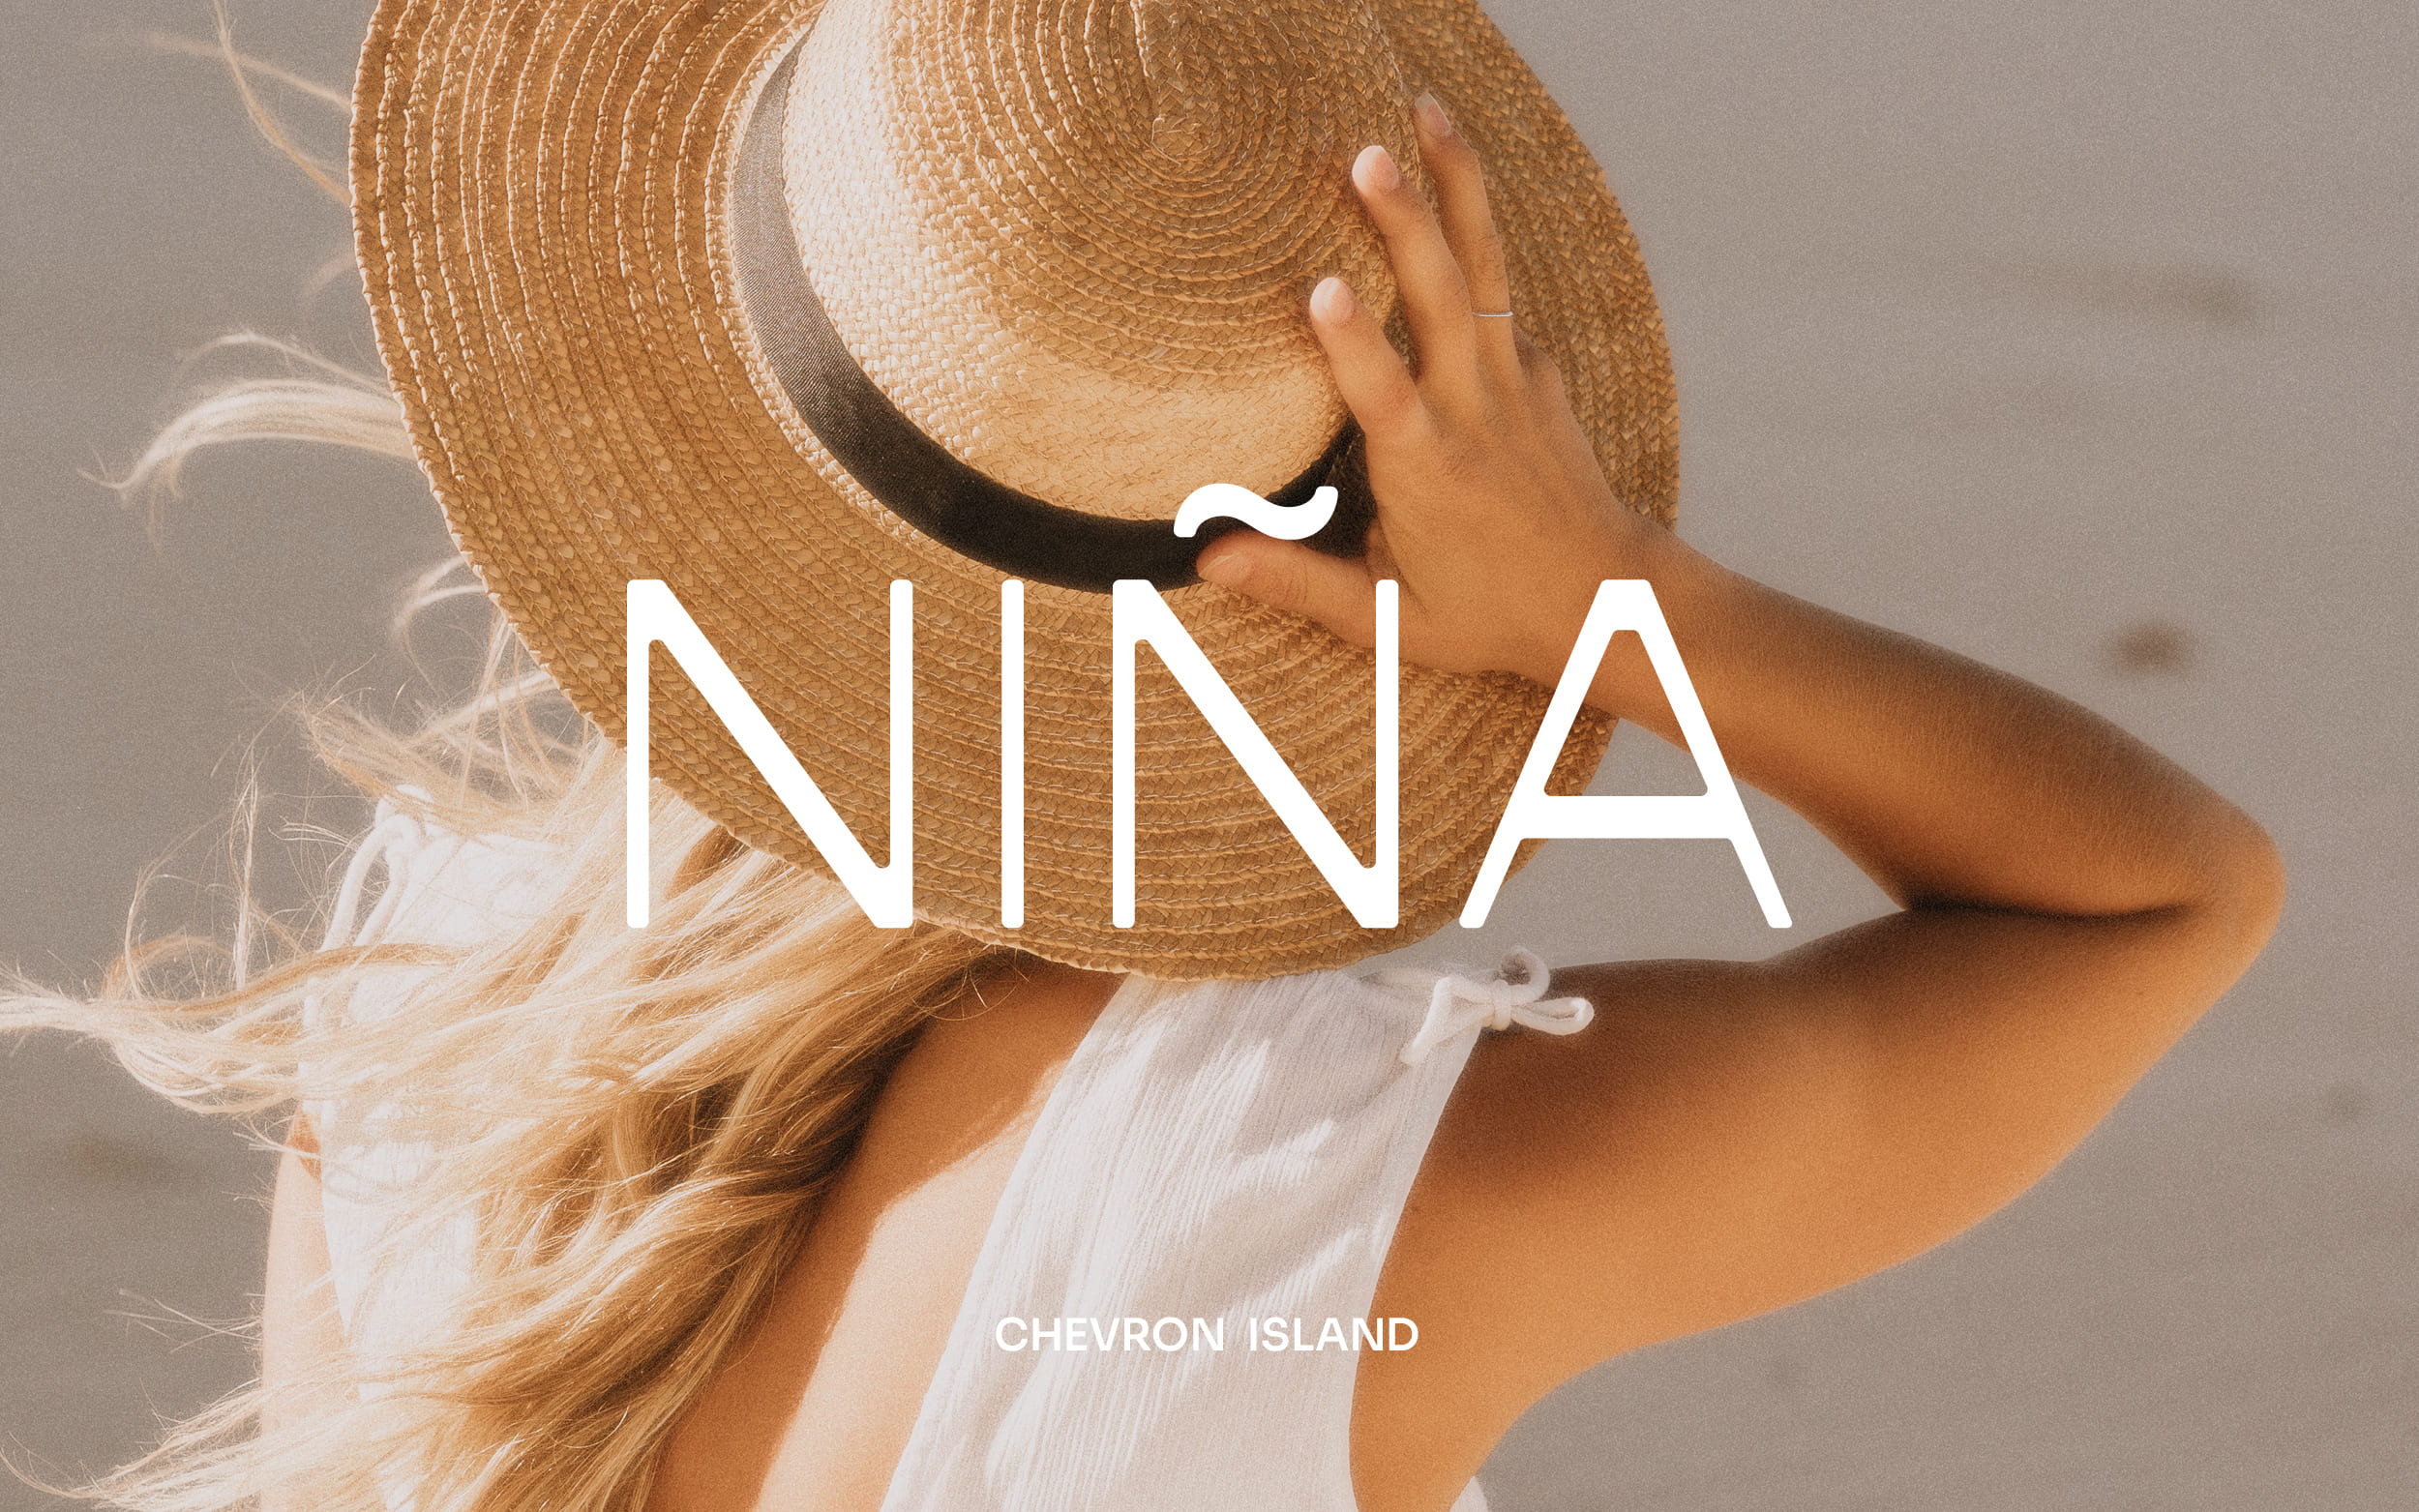 Nina branding over woman in sunhat and white dress